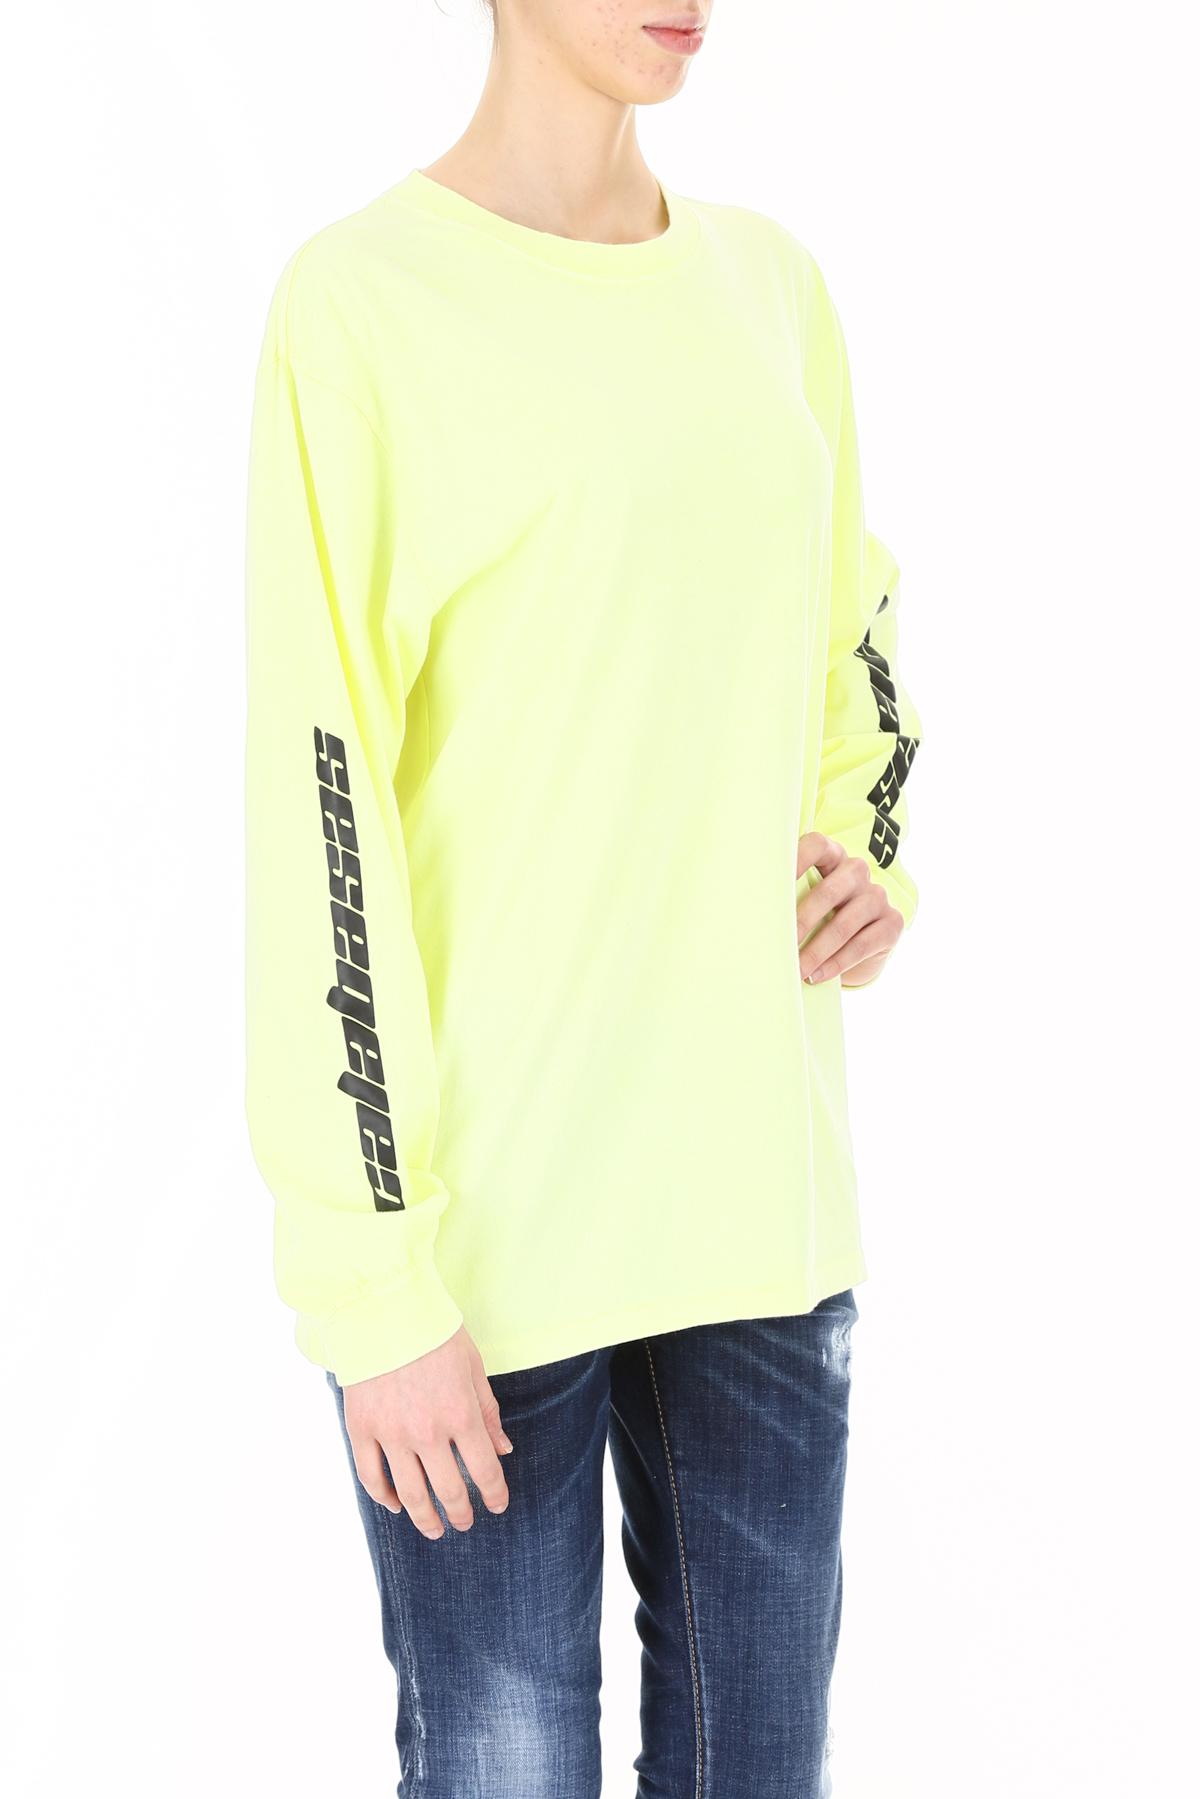 yeezy neon shirt